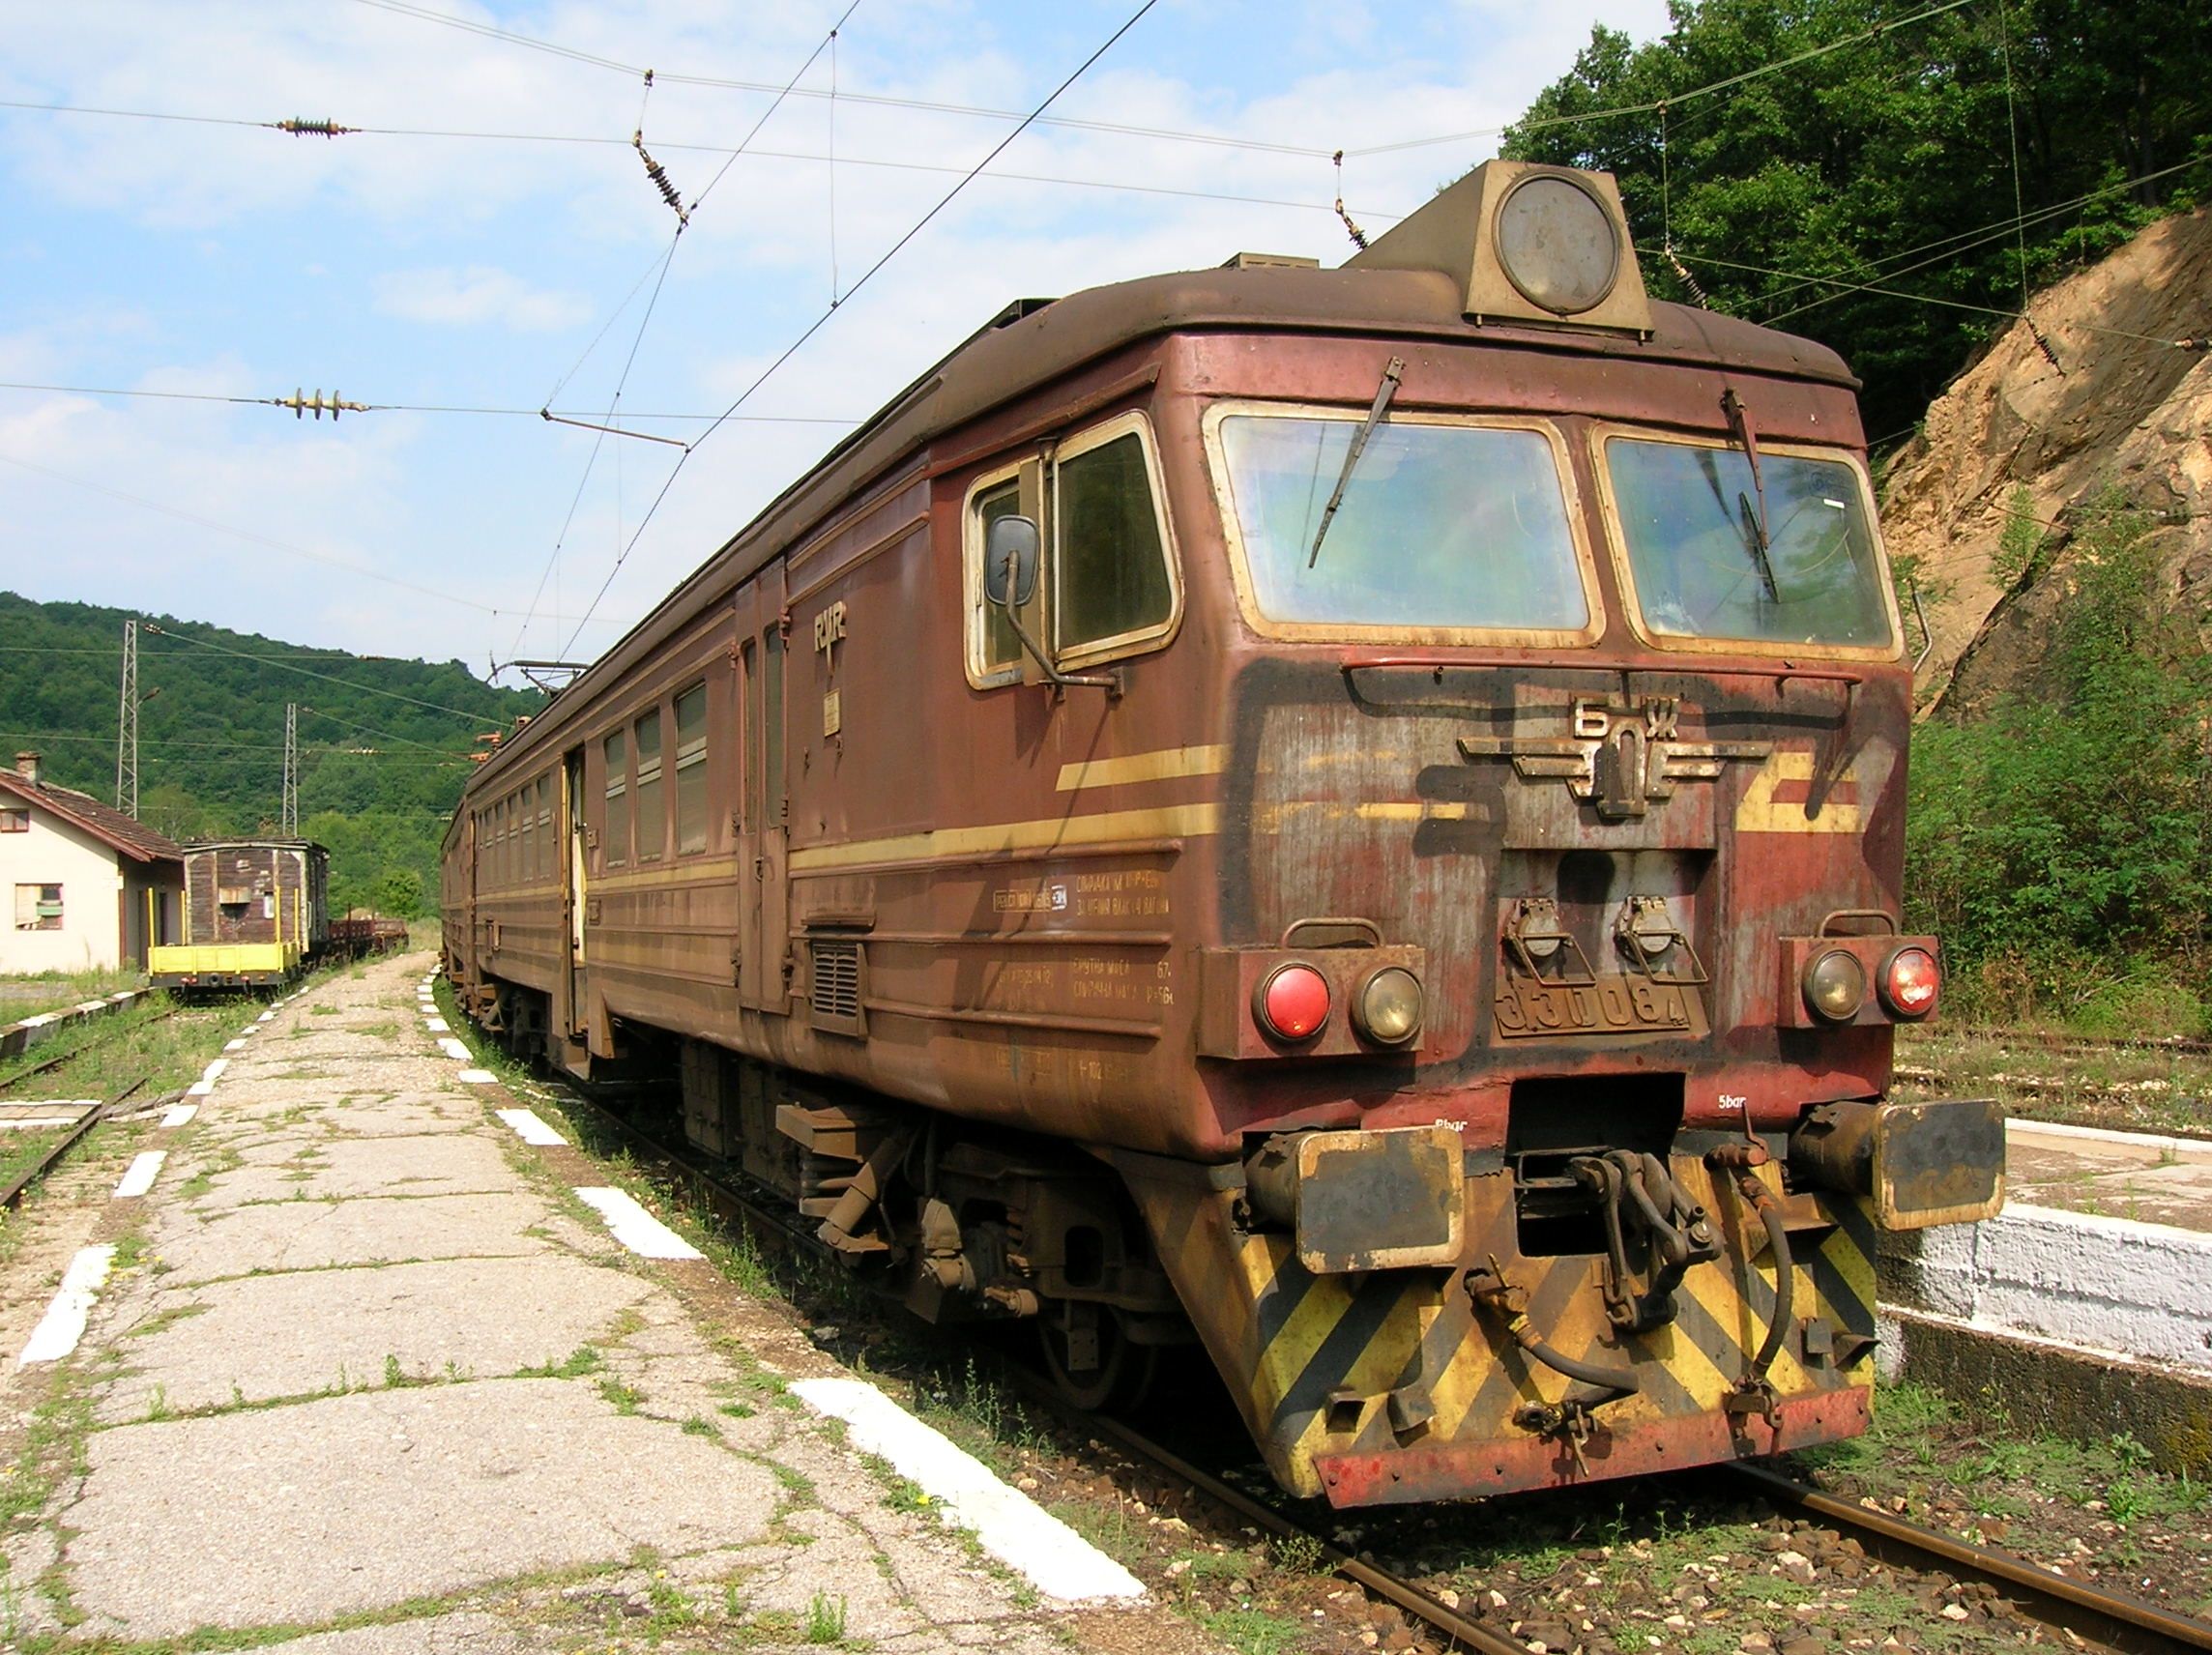 Old rusty train photo